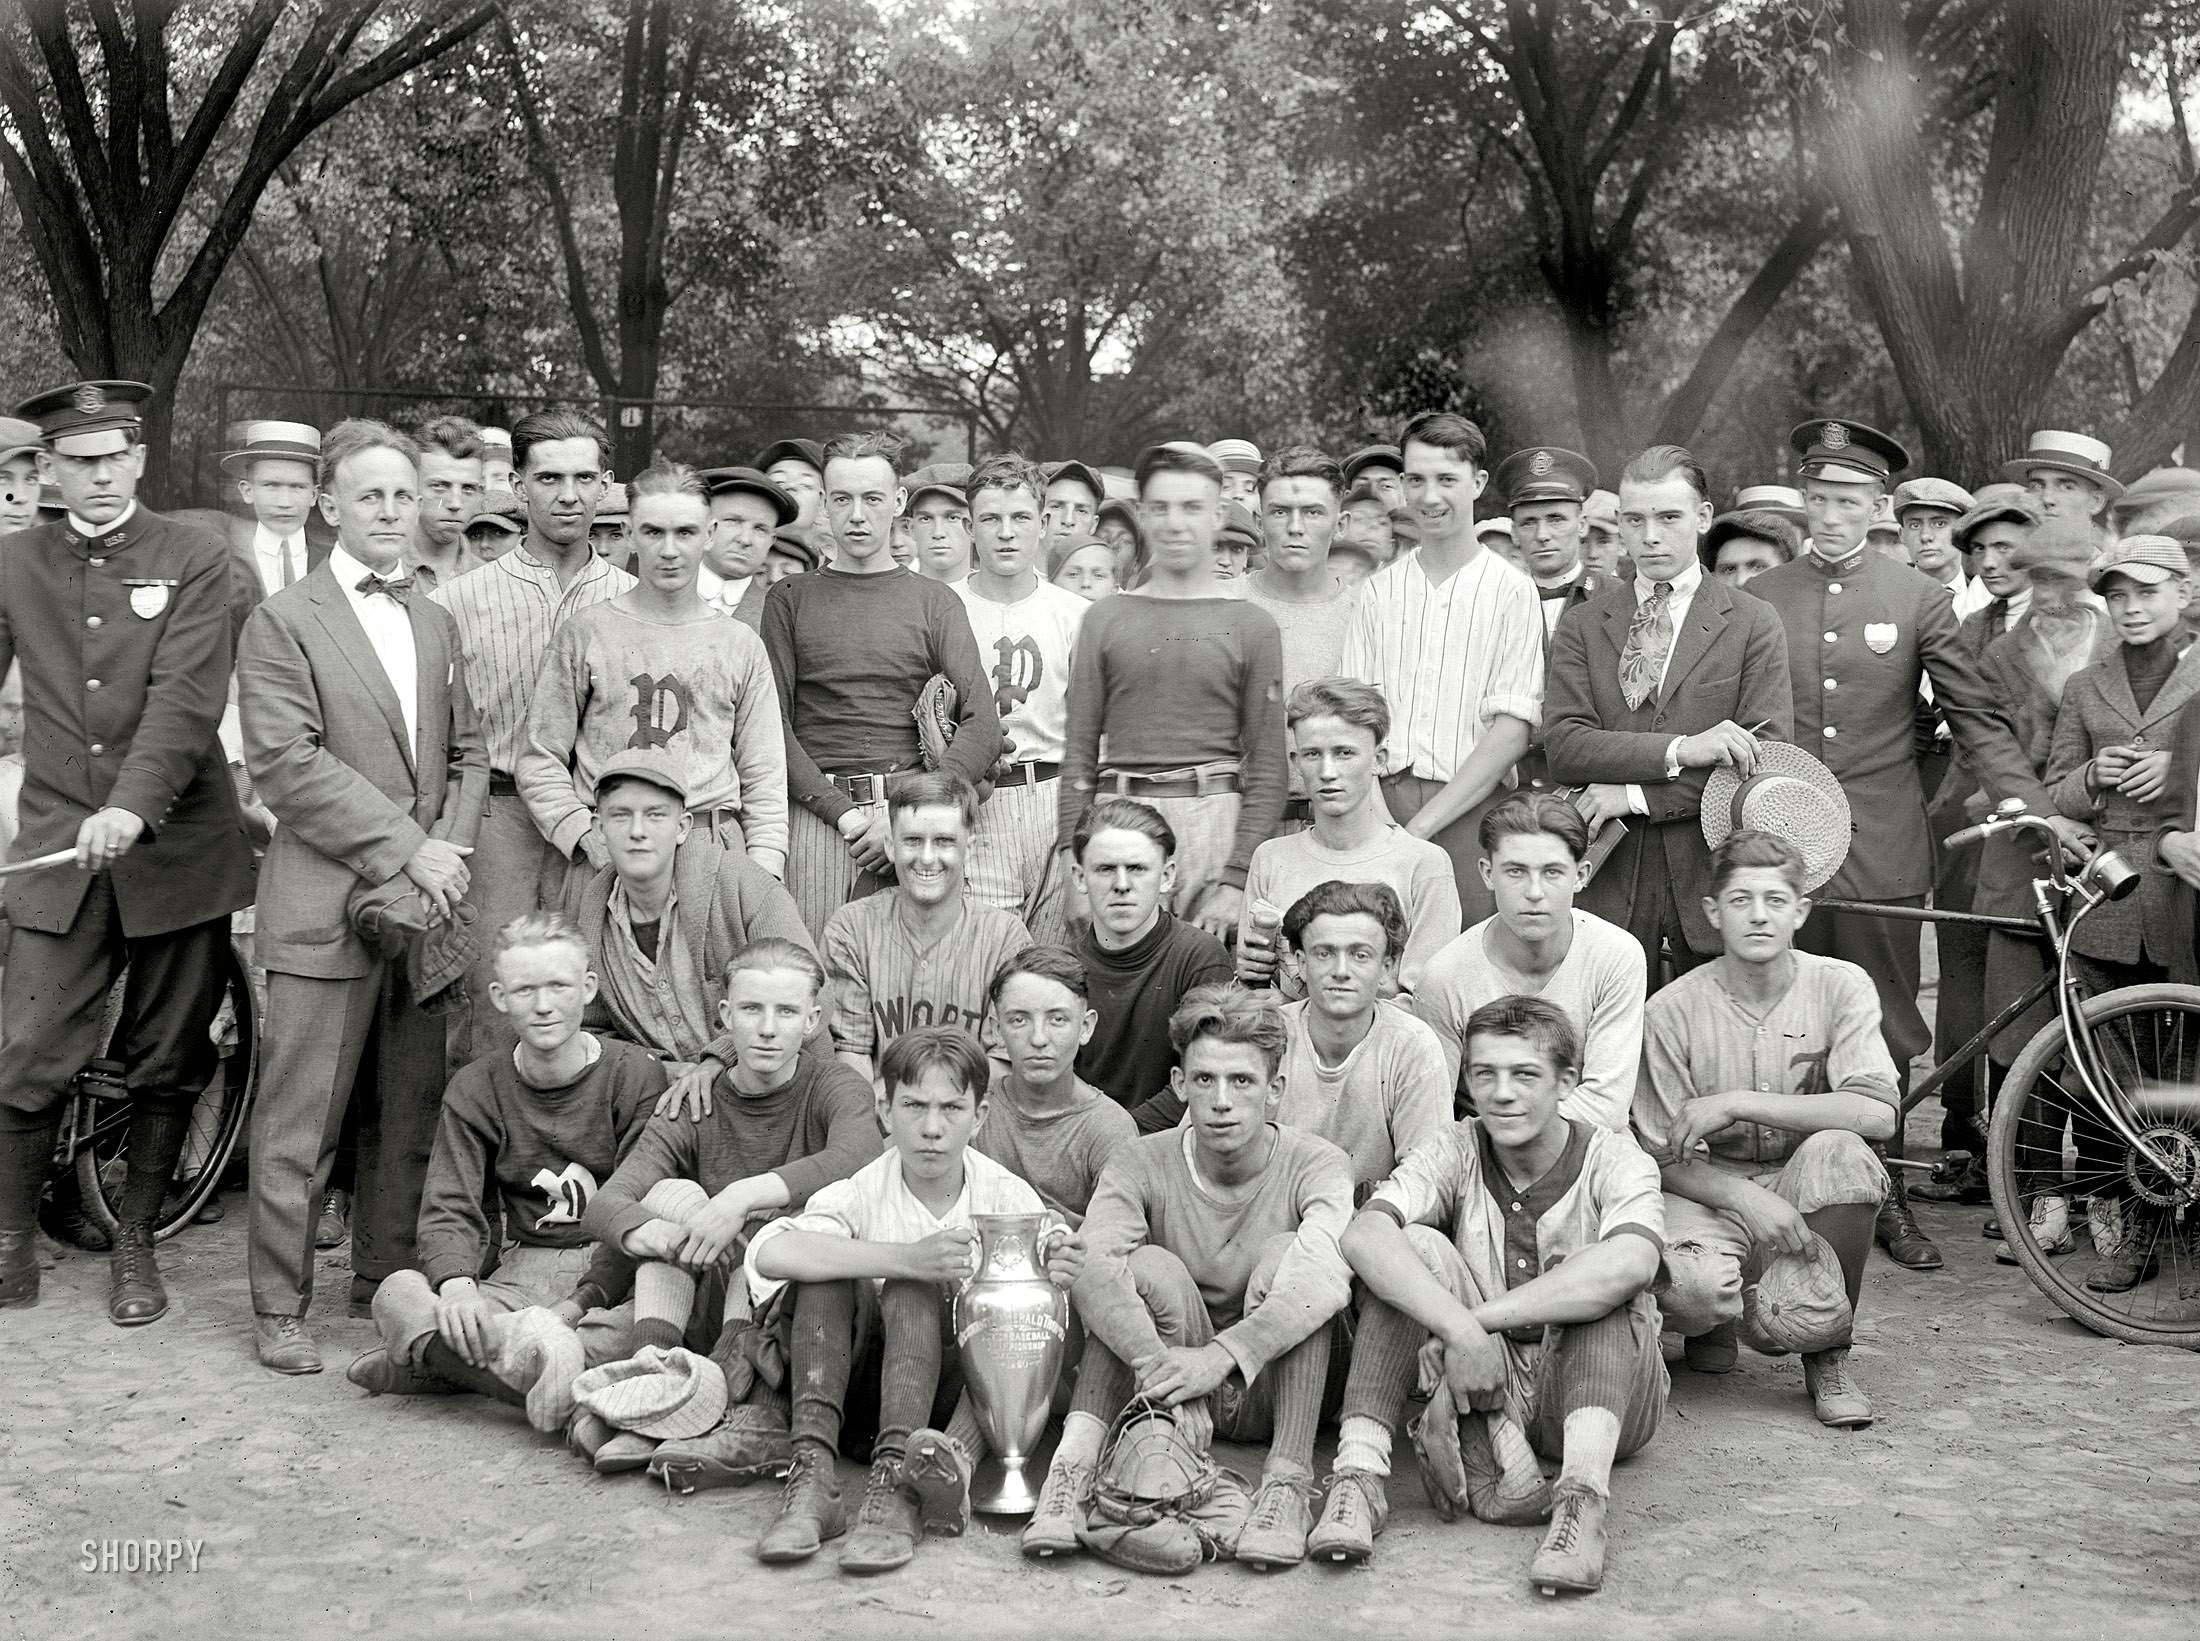 Proud winners of the 1920 Washington Herald Junior Baseball Championship, 1920